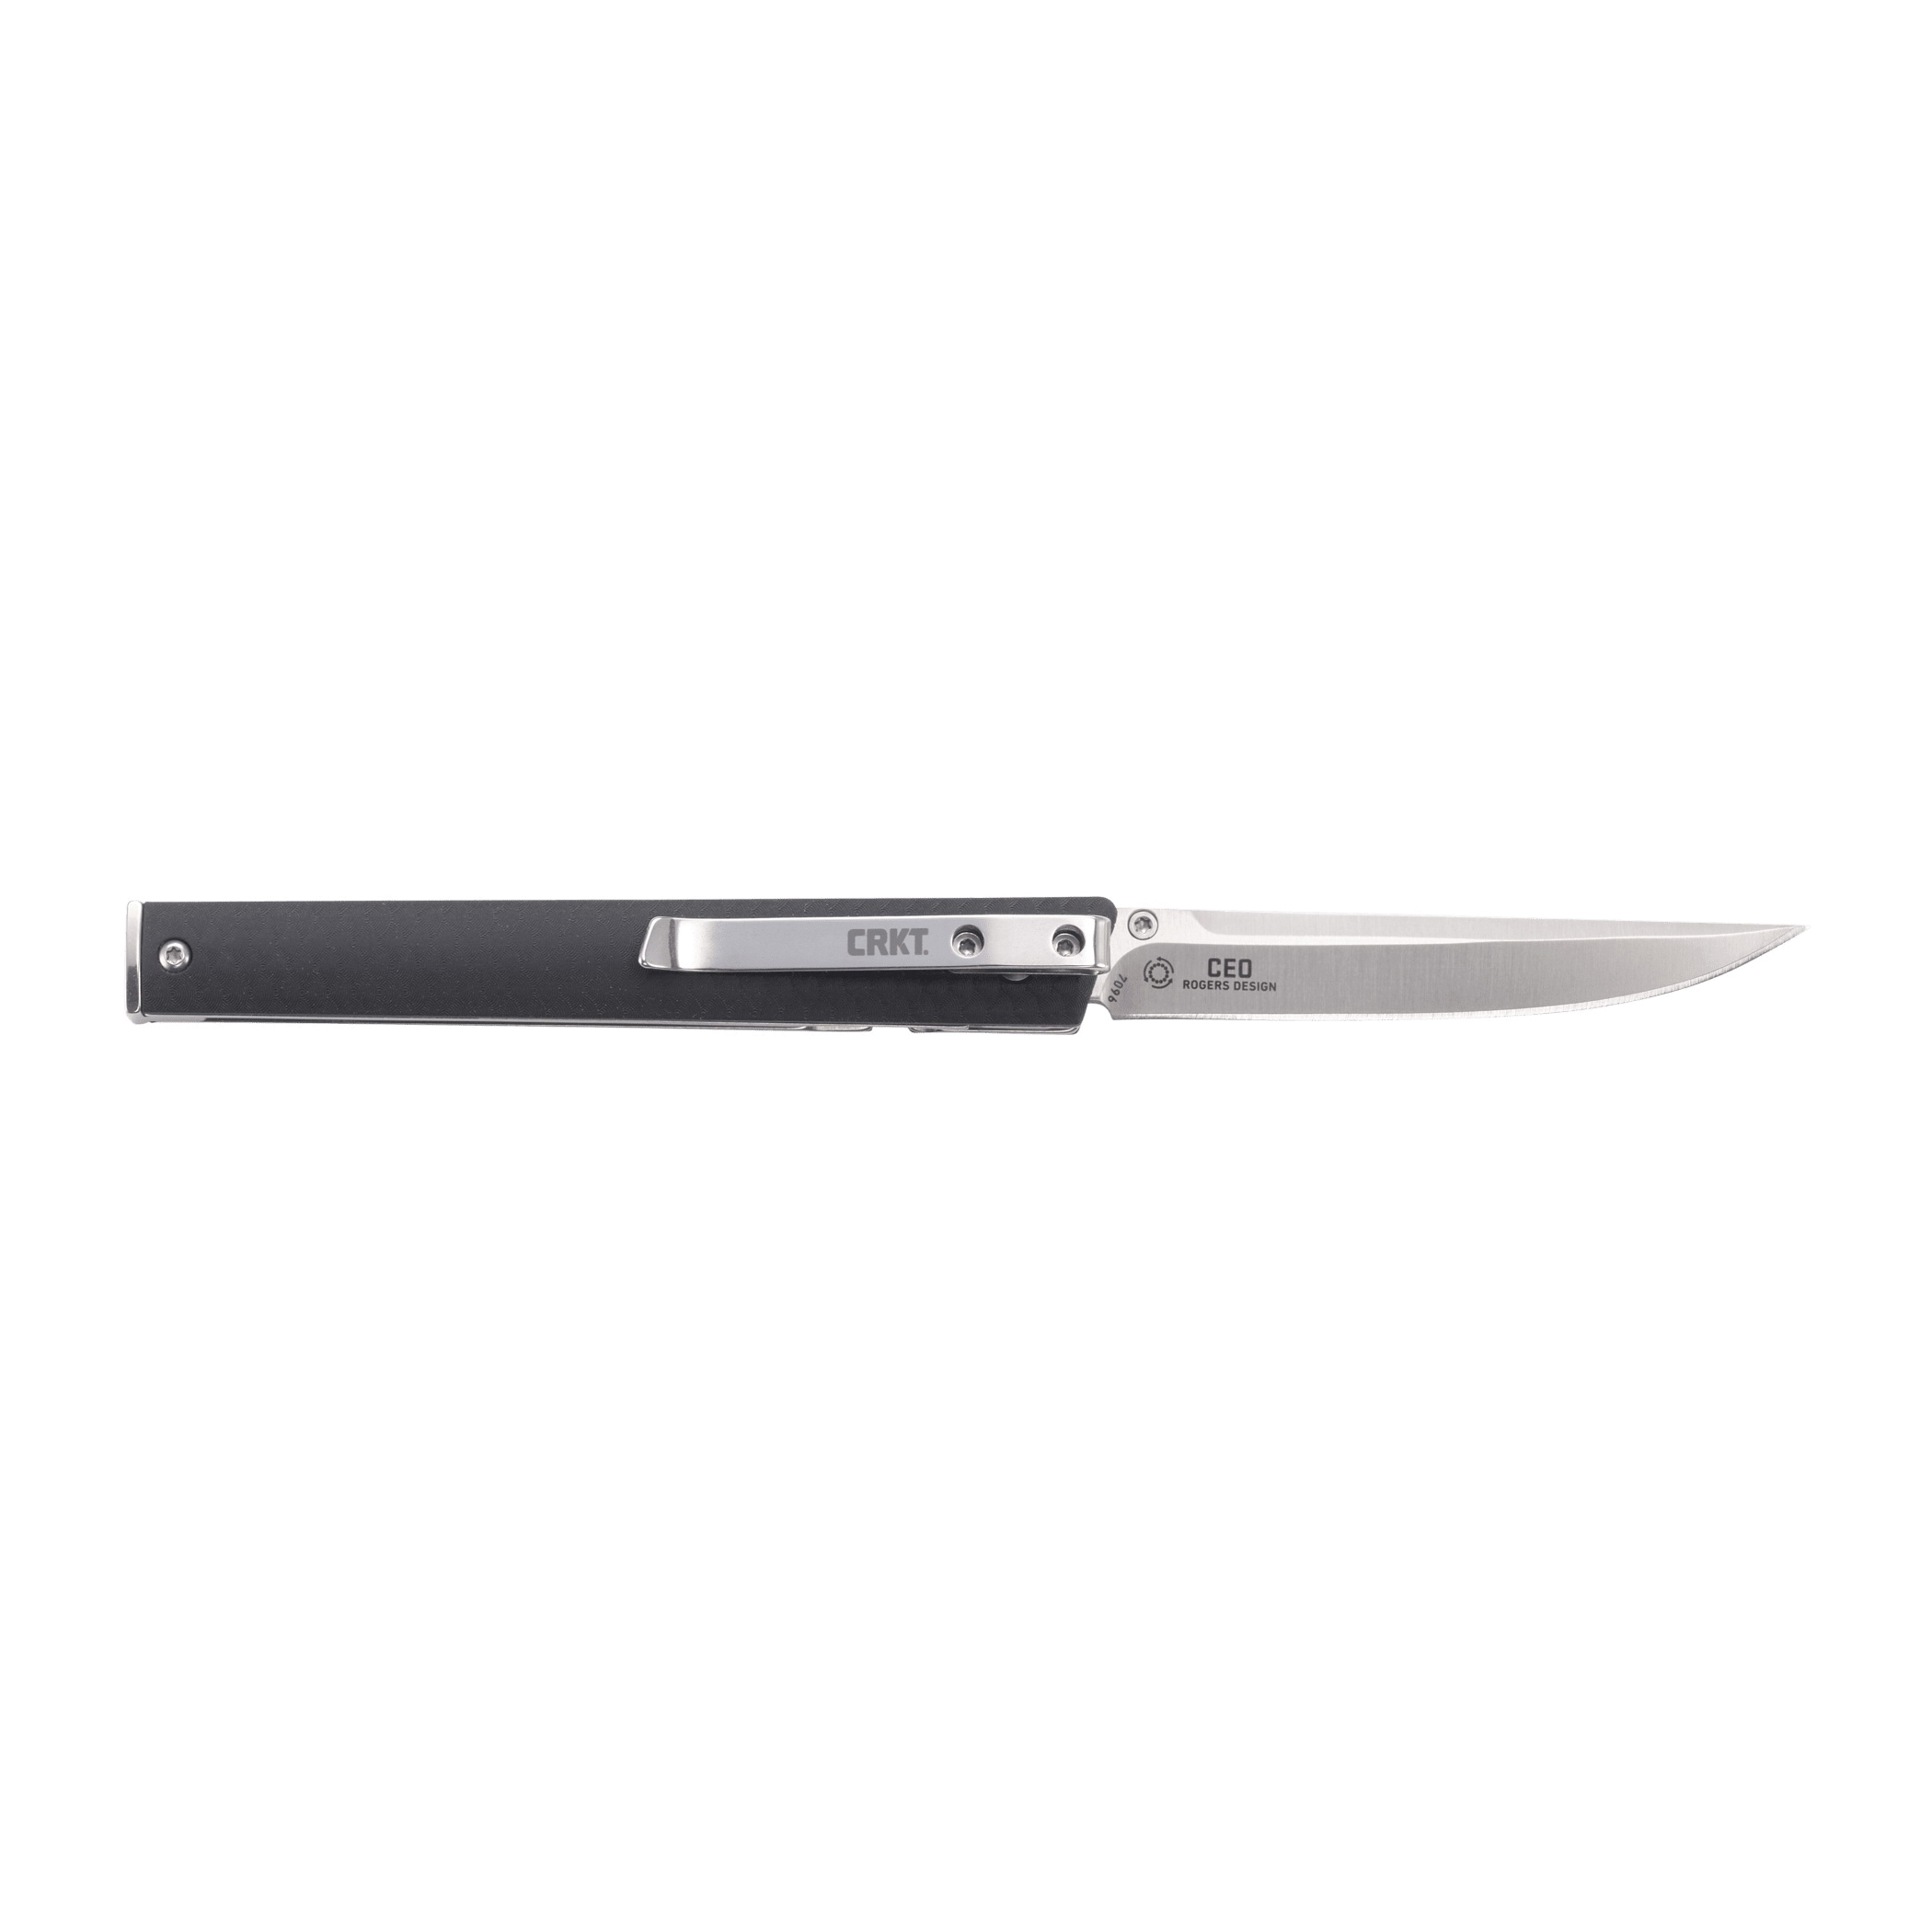 Endorser 7096 CEO Folding Knife, 3.11 in L Blade, Steel Blade - 2